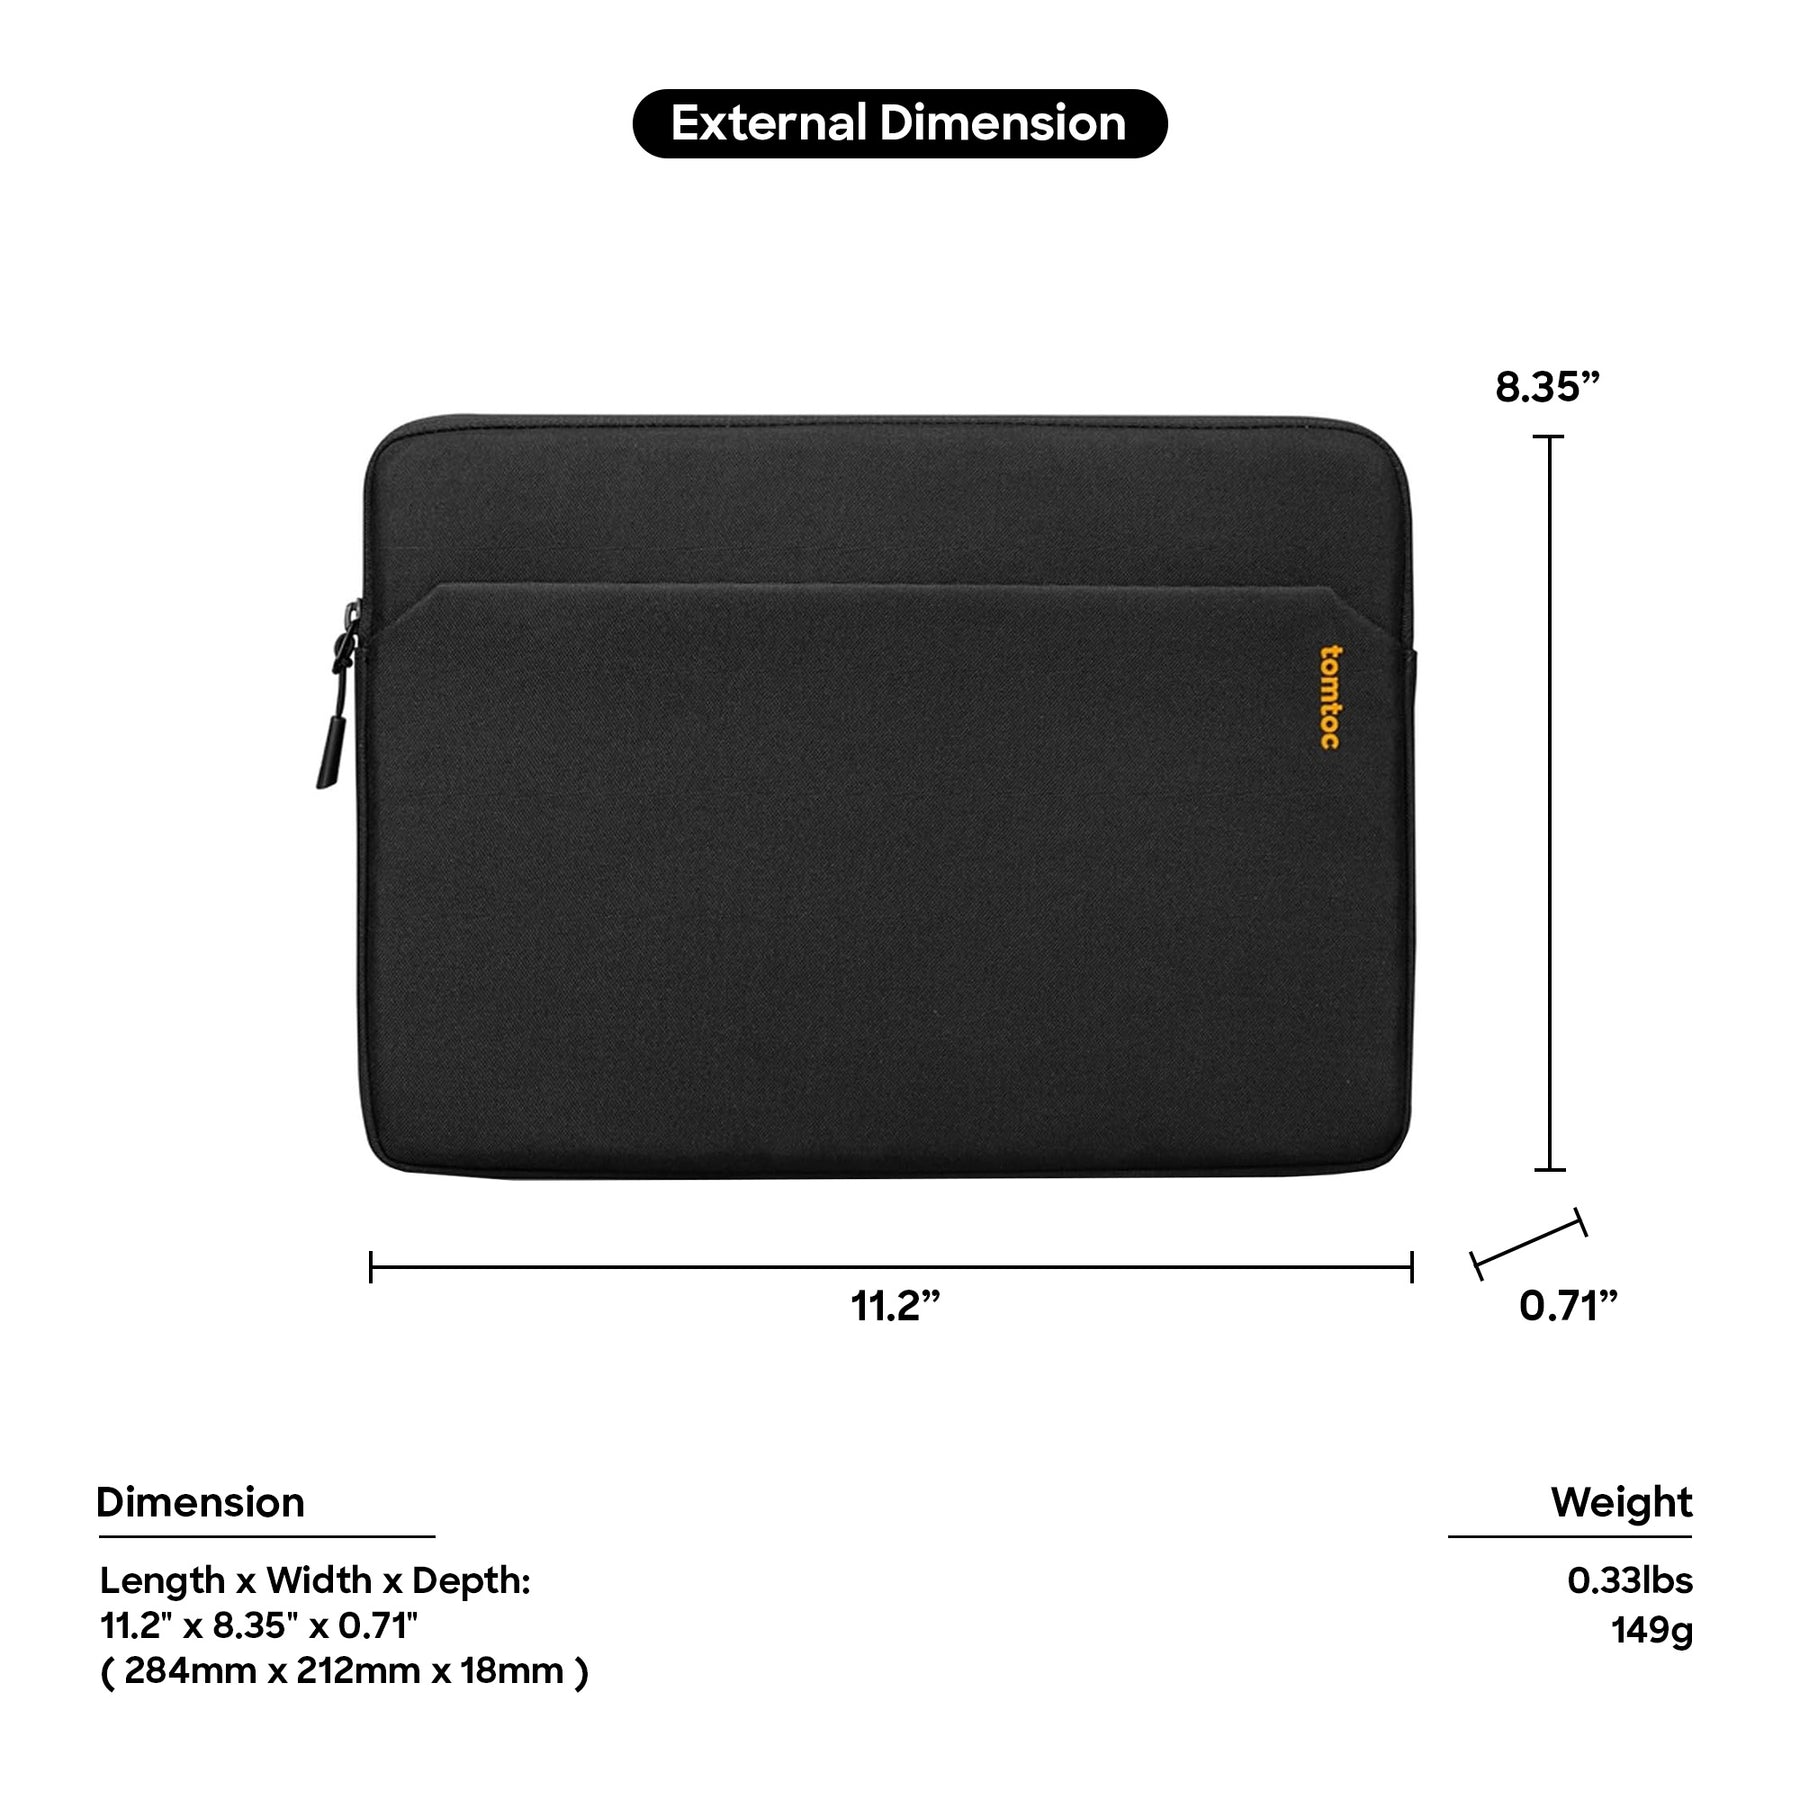 tomtoc 11 Inch Tablet Sleeve Bag - Khaki